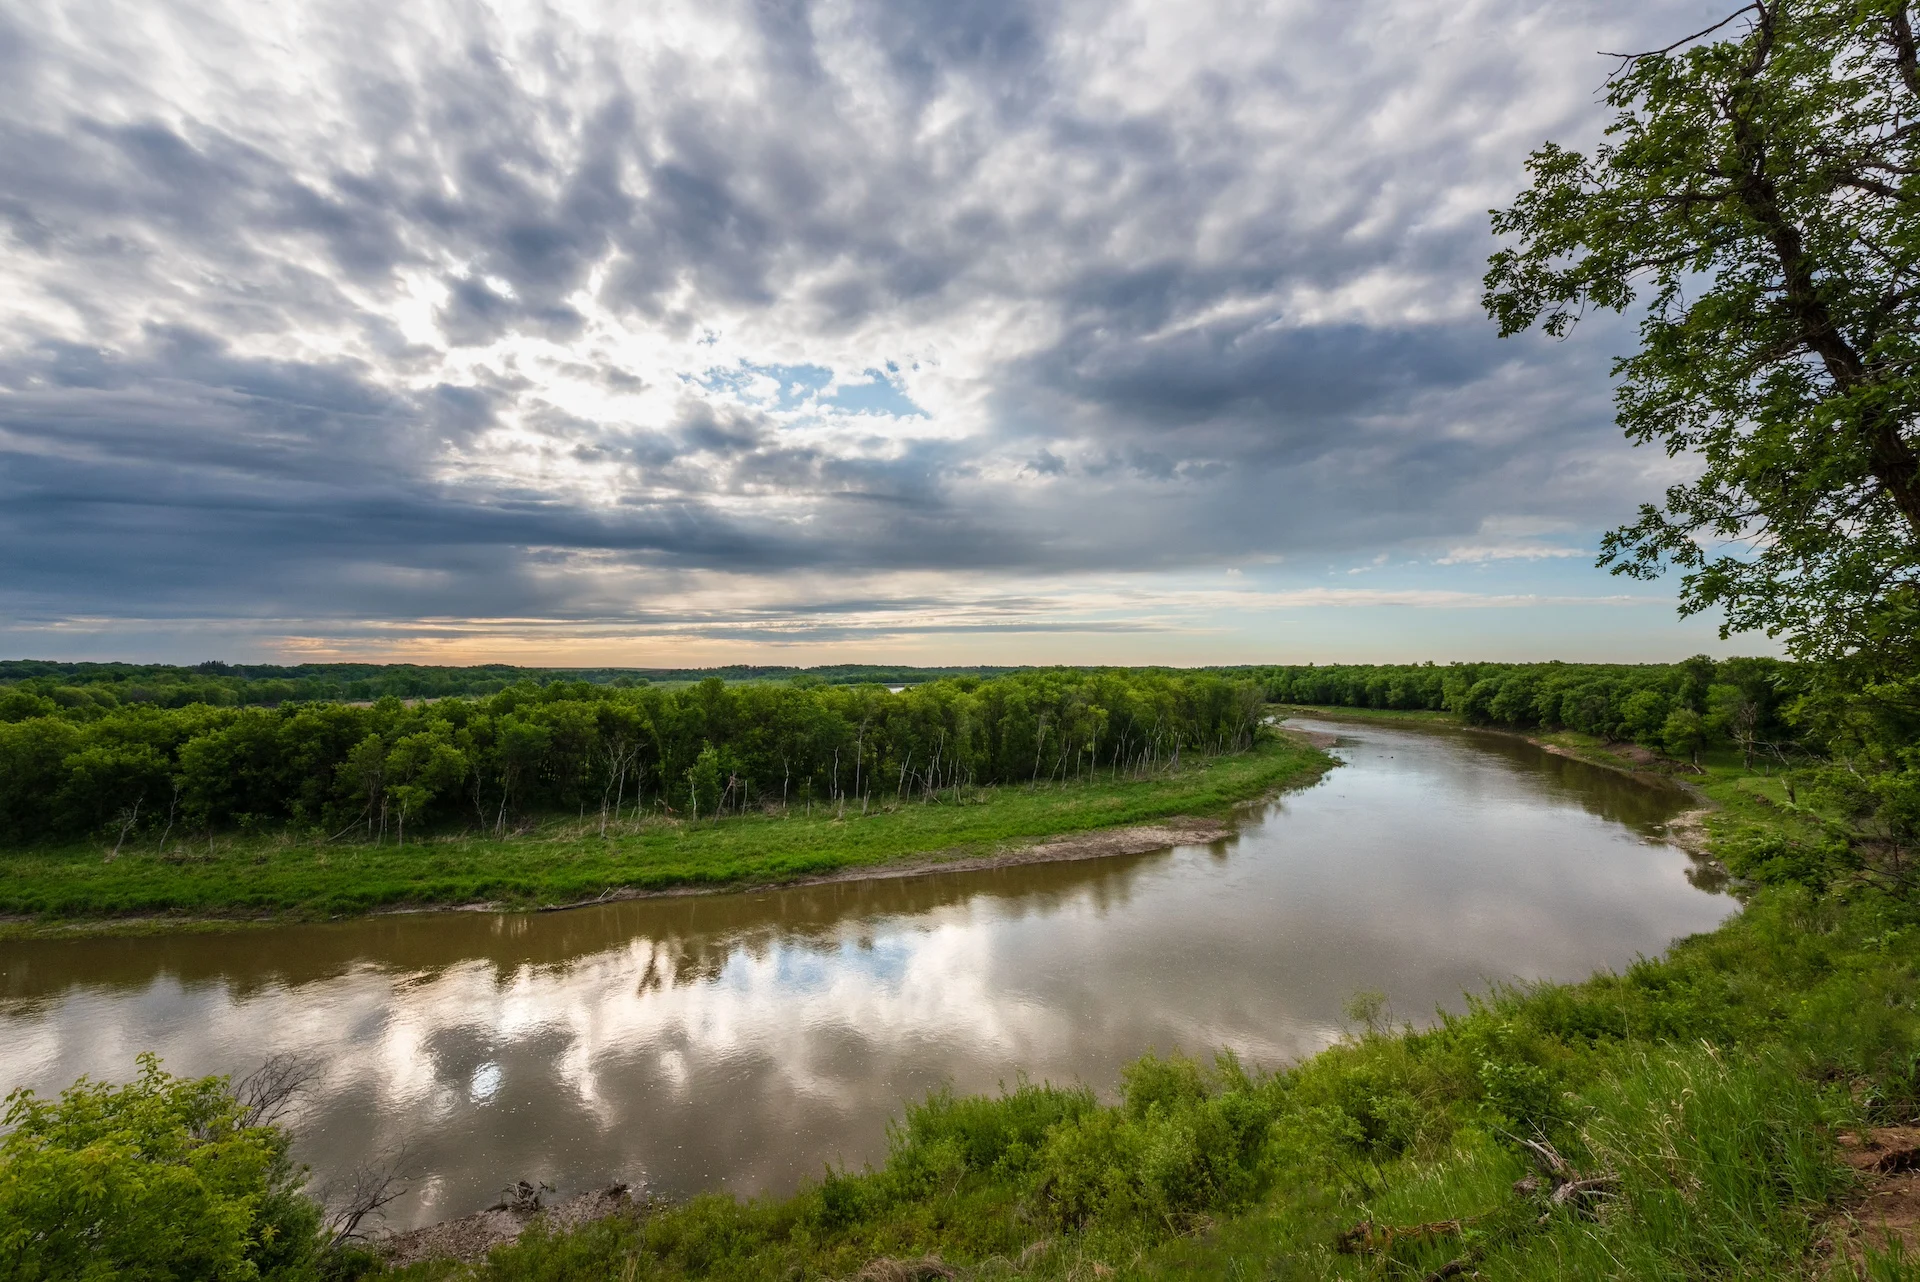 Partnerships key to successful protection of crucial Manitoba habitats